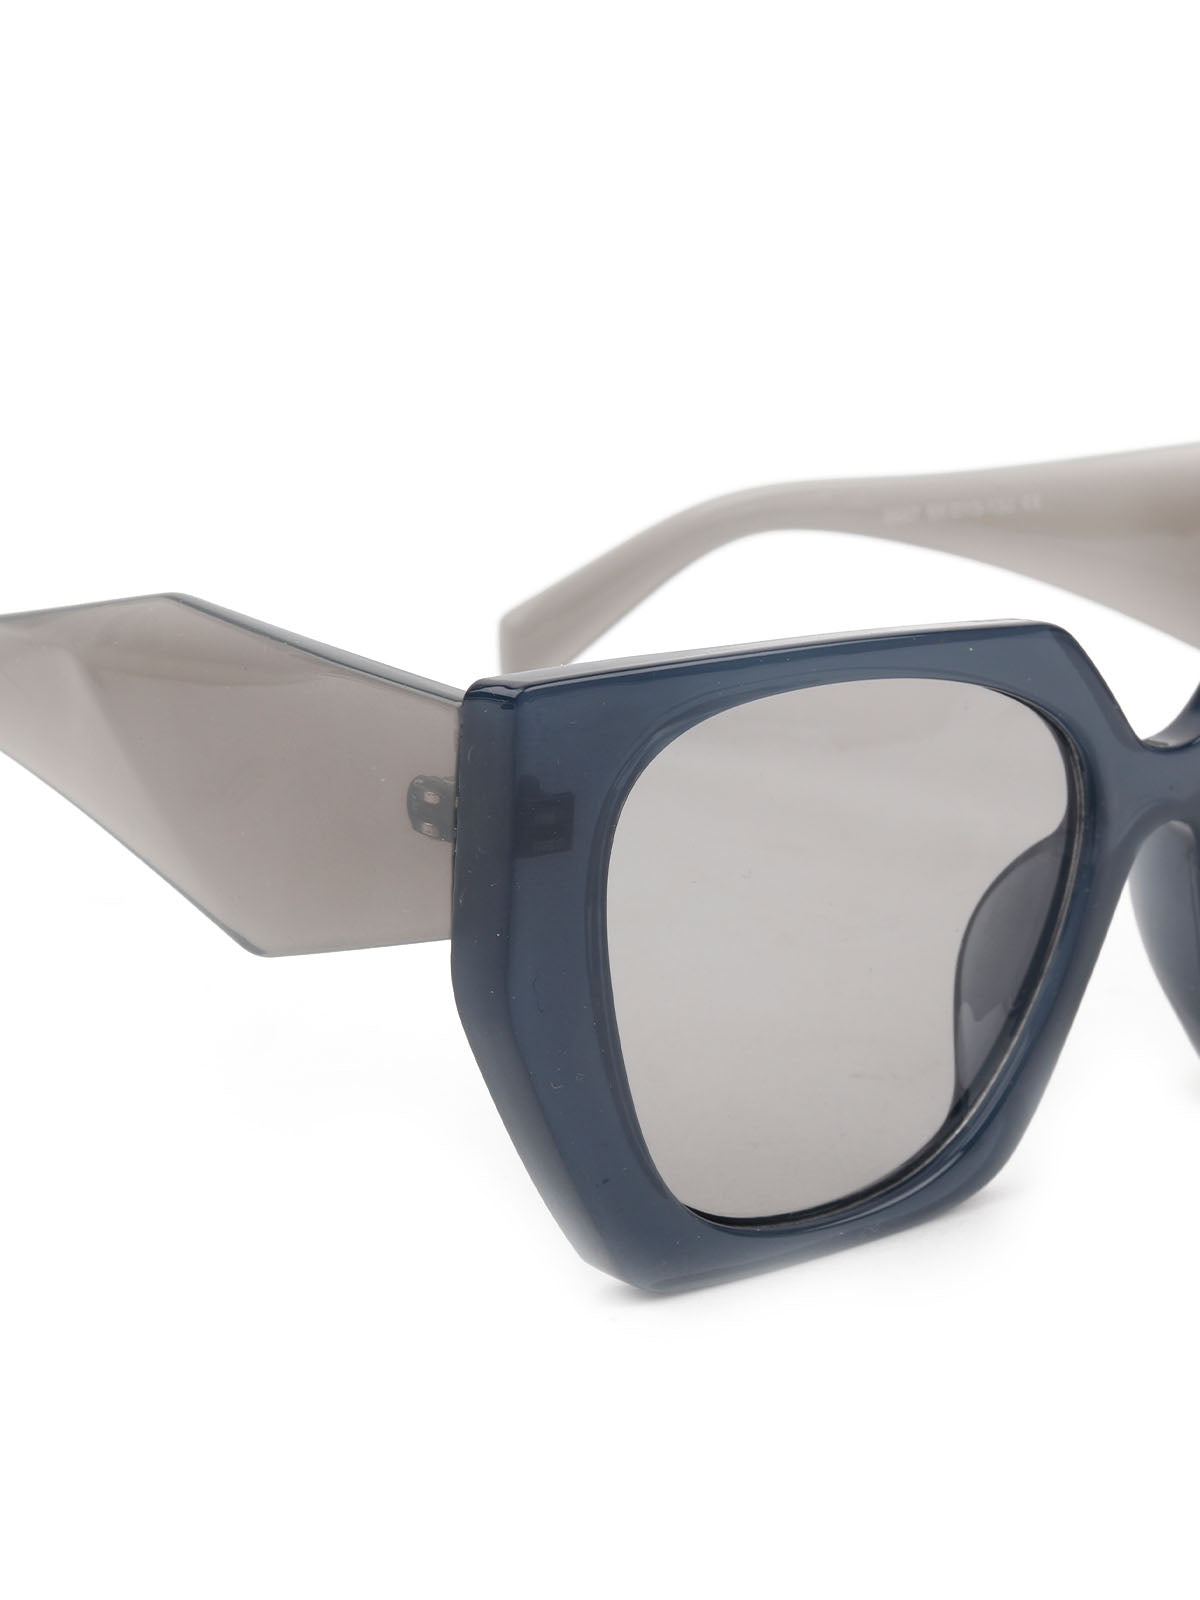 Vogue Eyewear Transparent Grey Sunglasses | Glasses.com® | Free Shipping